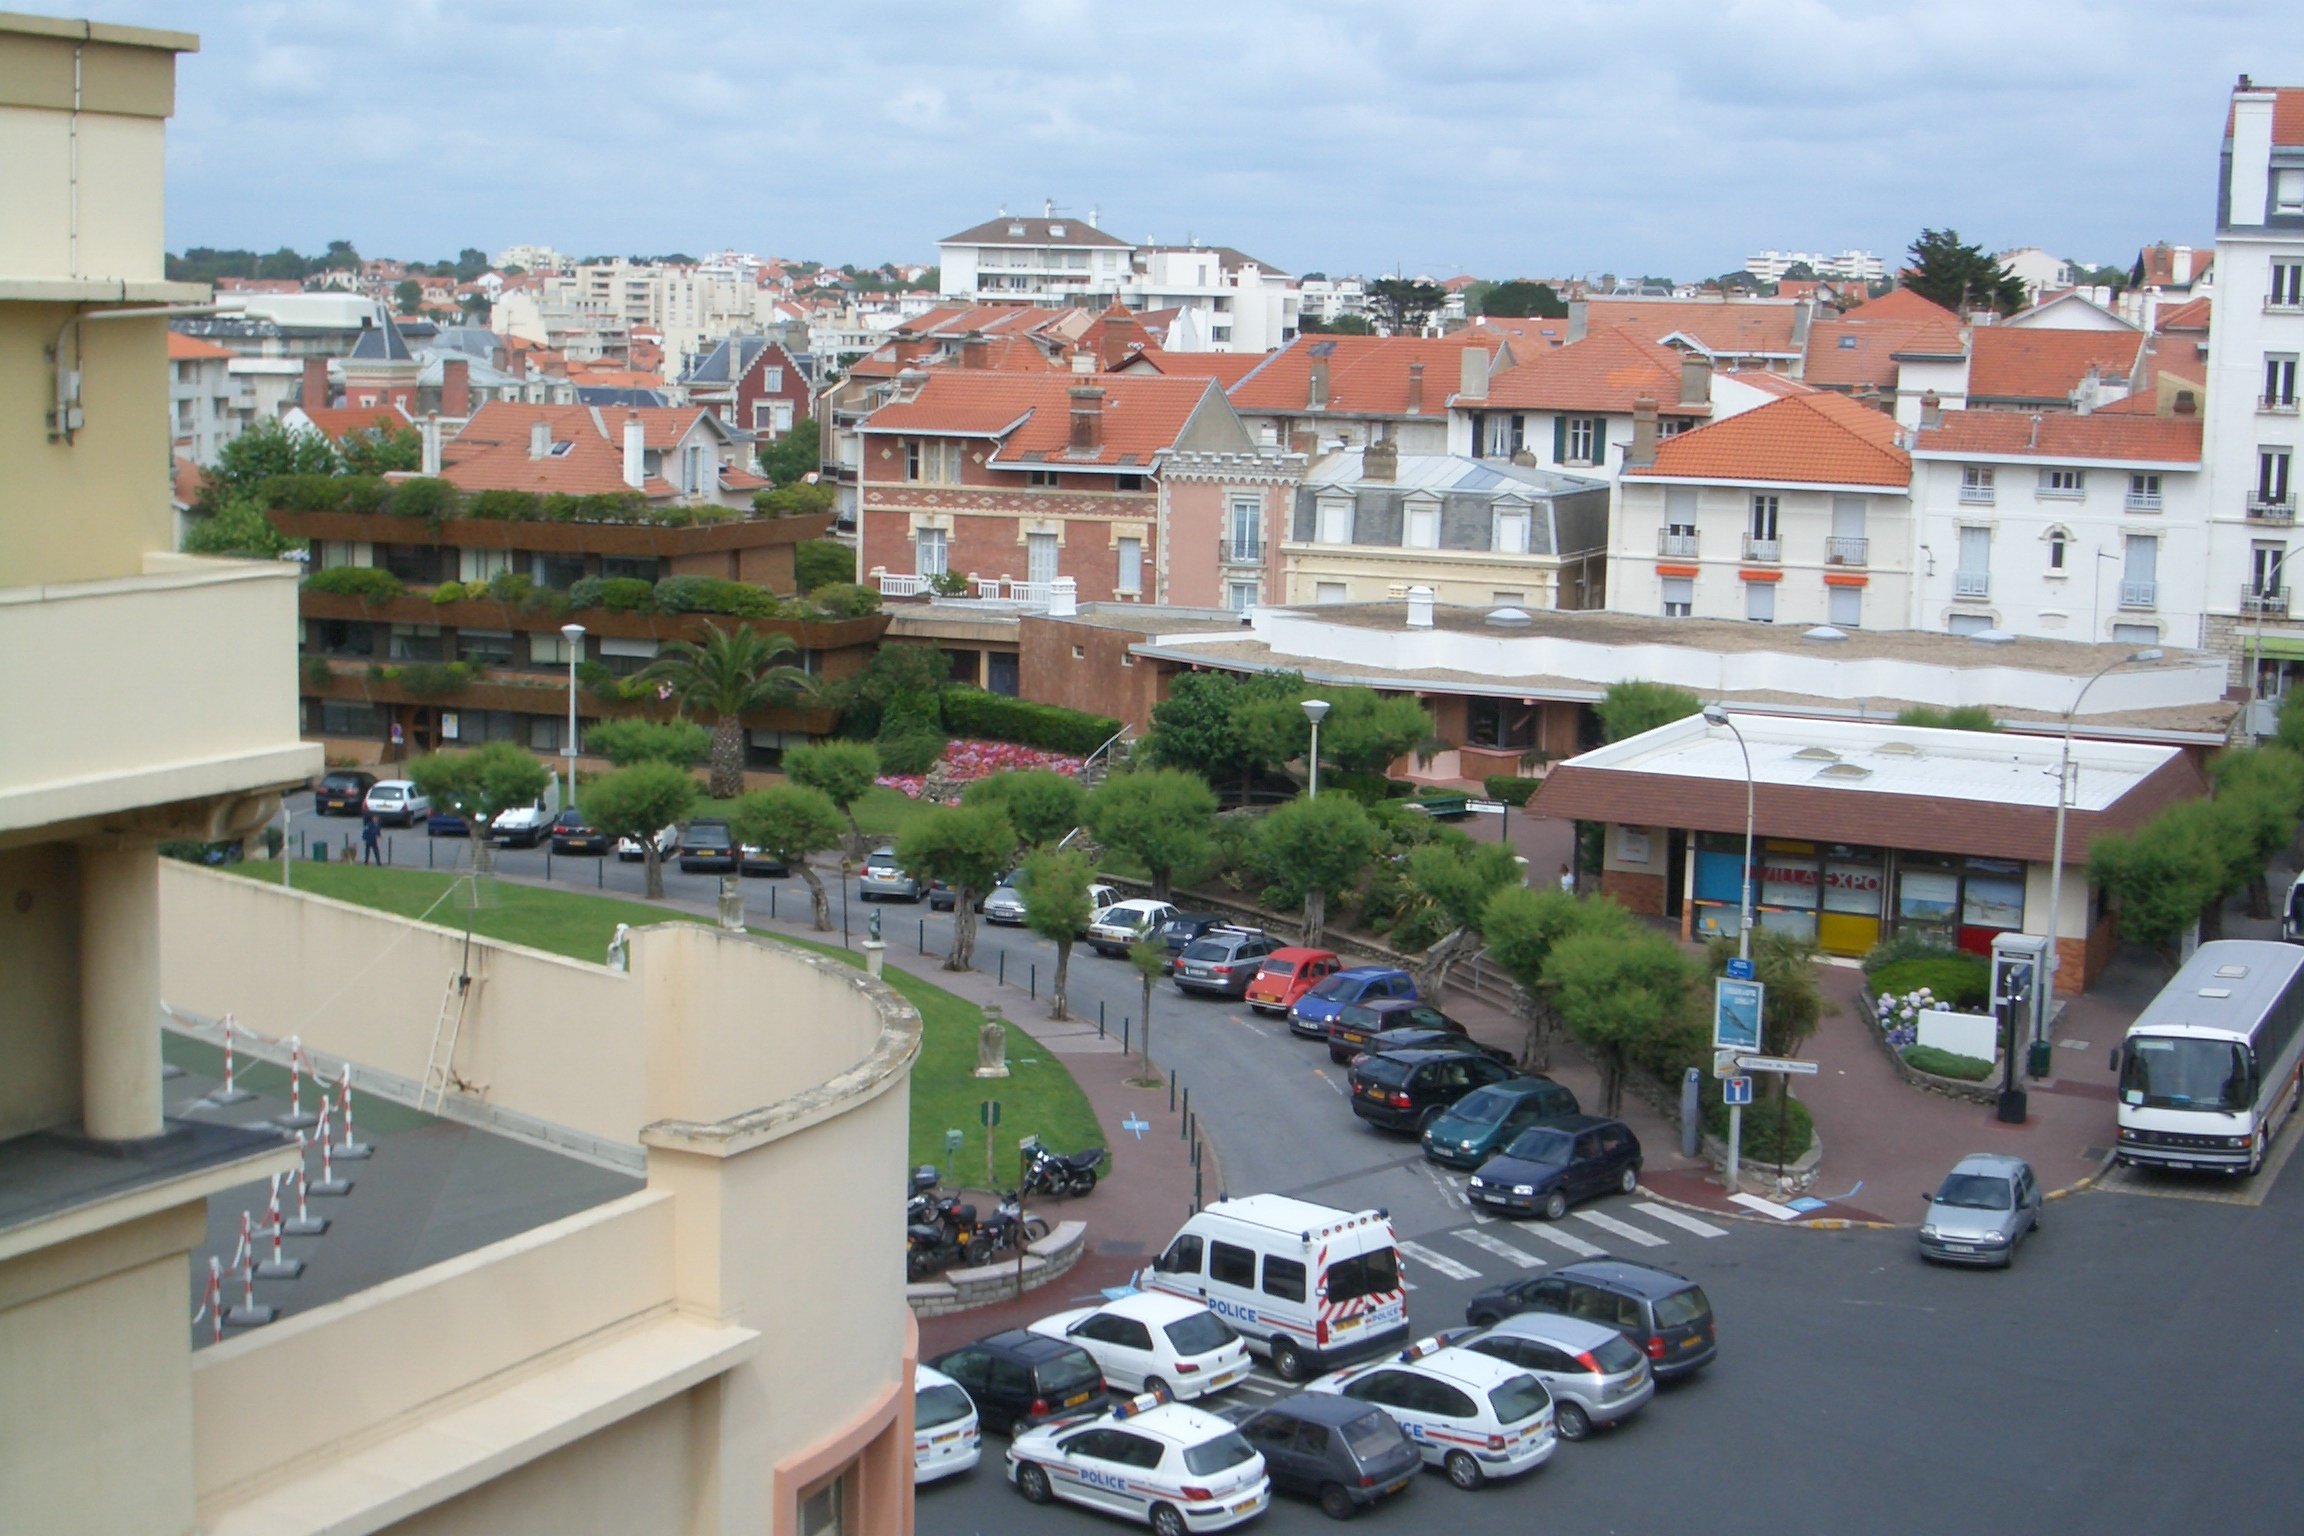 View of Biarritz